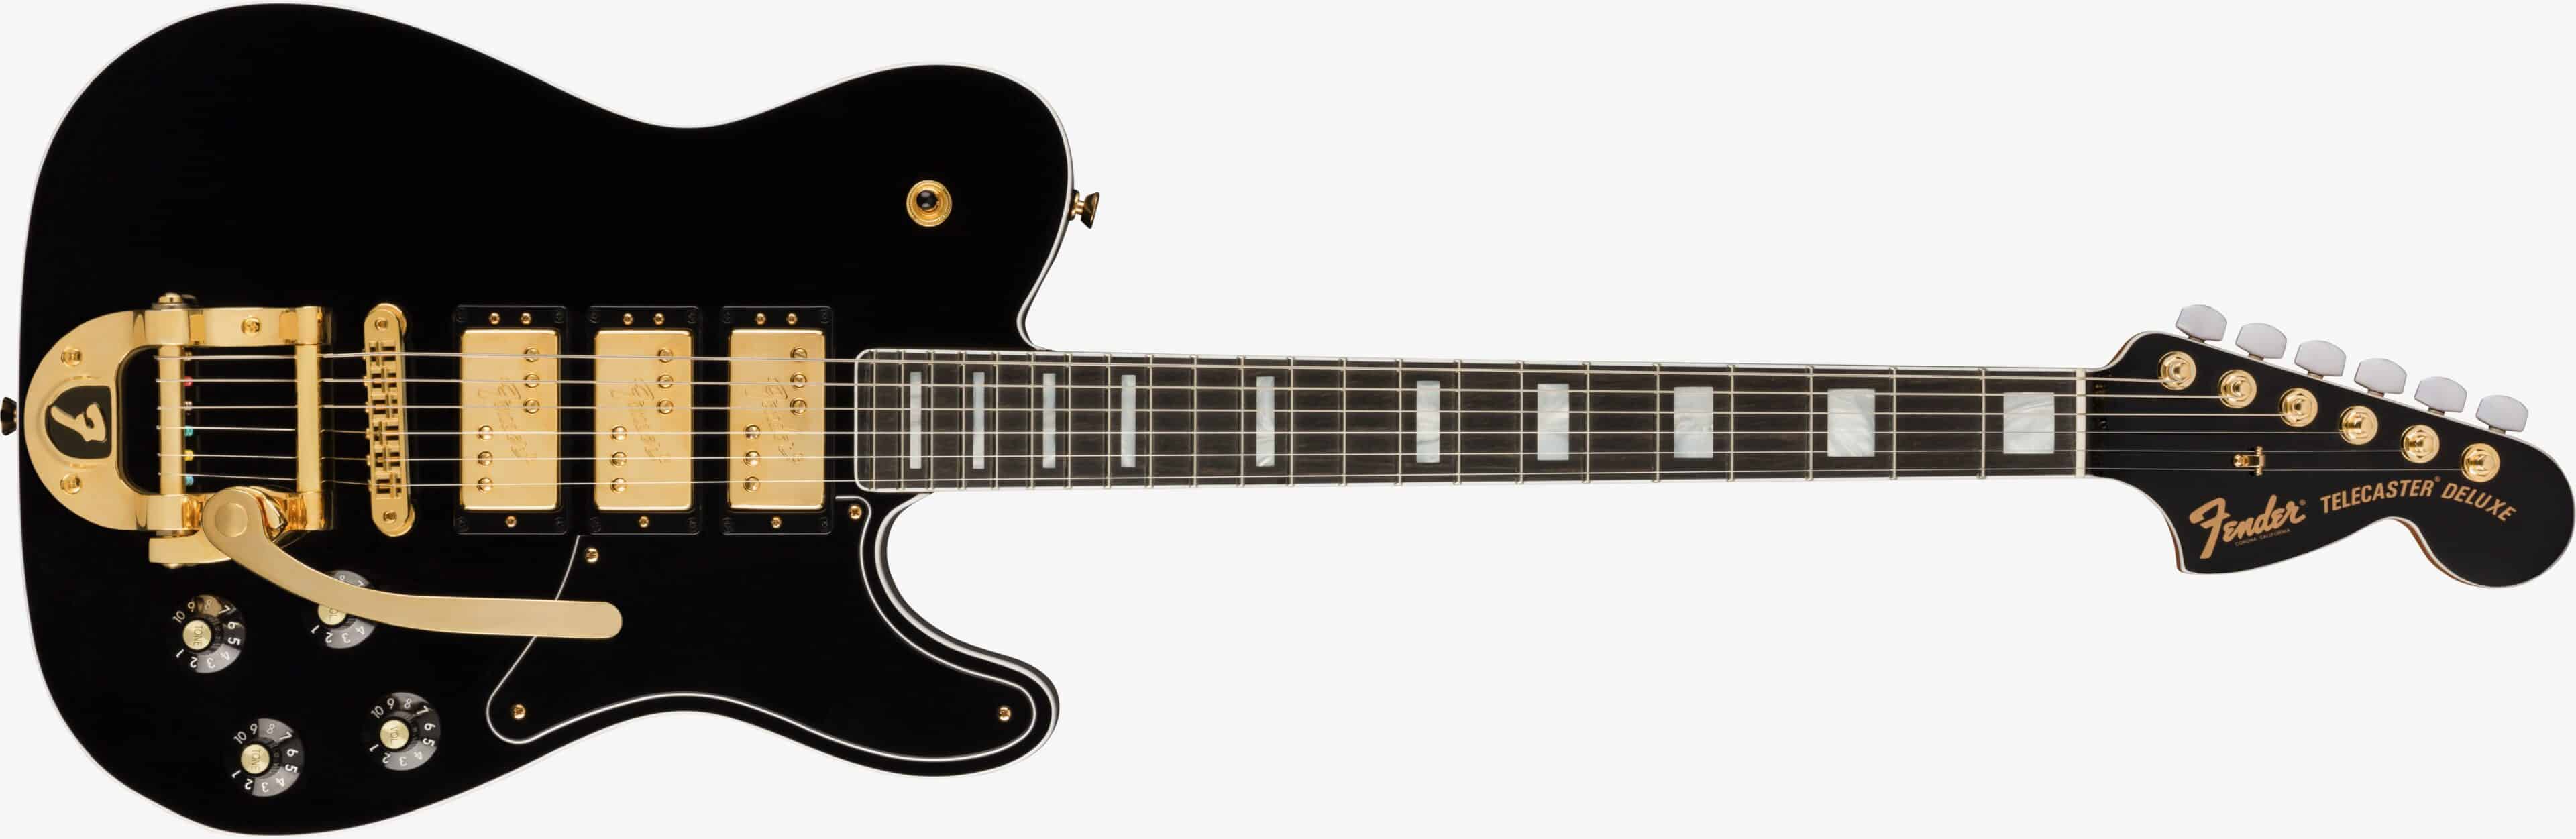 Fender’s New Troublemaker Tele Deluxe Is One Unique, Sharp Looking Guitar